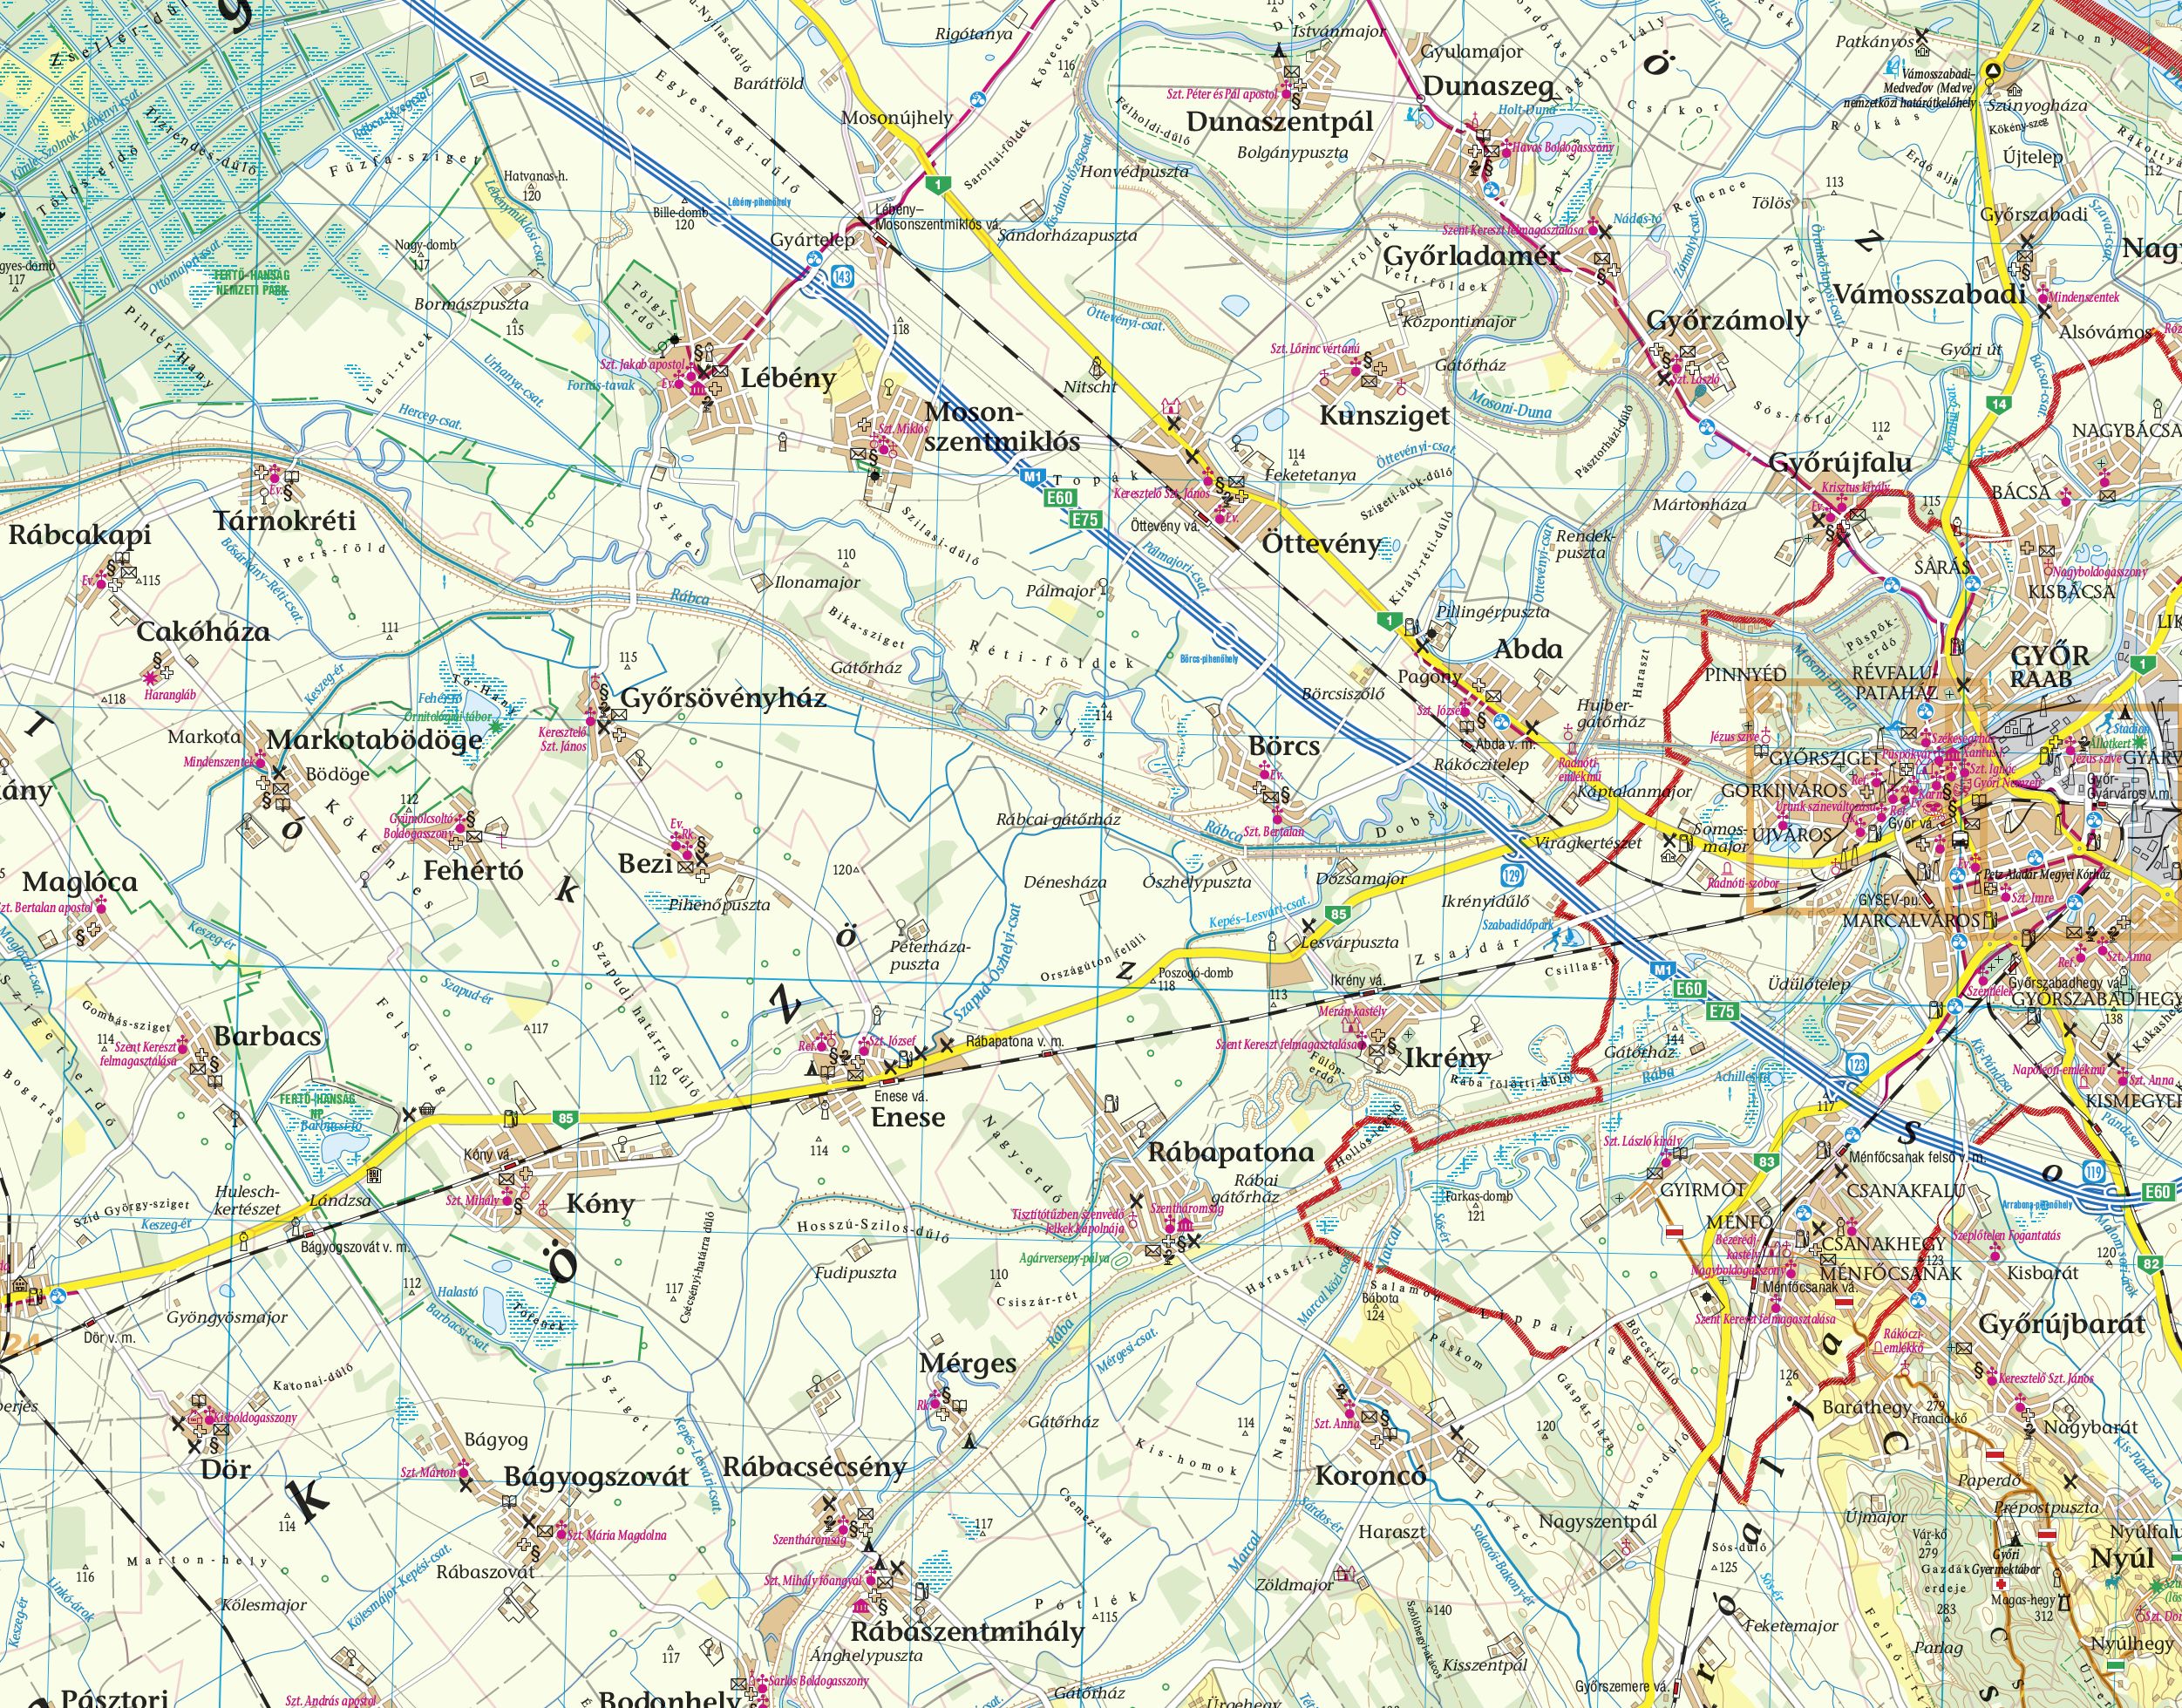 Győr-Moson-Sopron county sample map 1:100.000